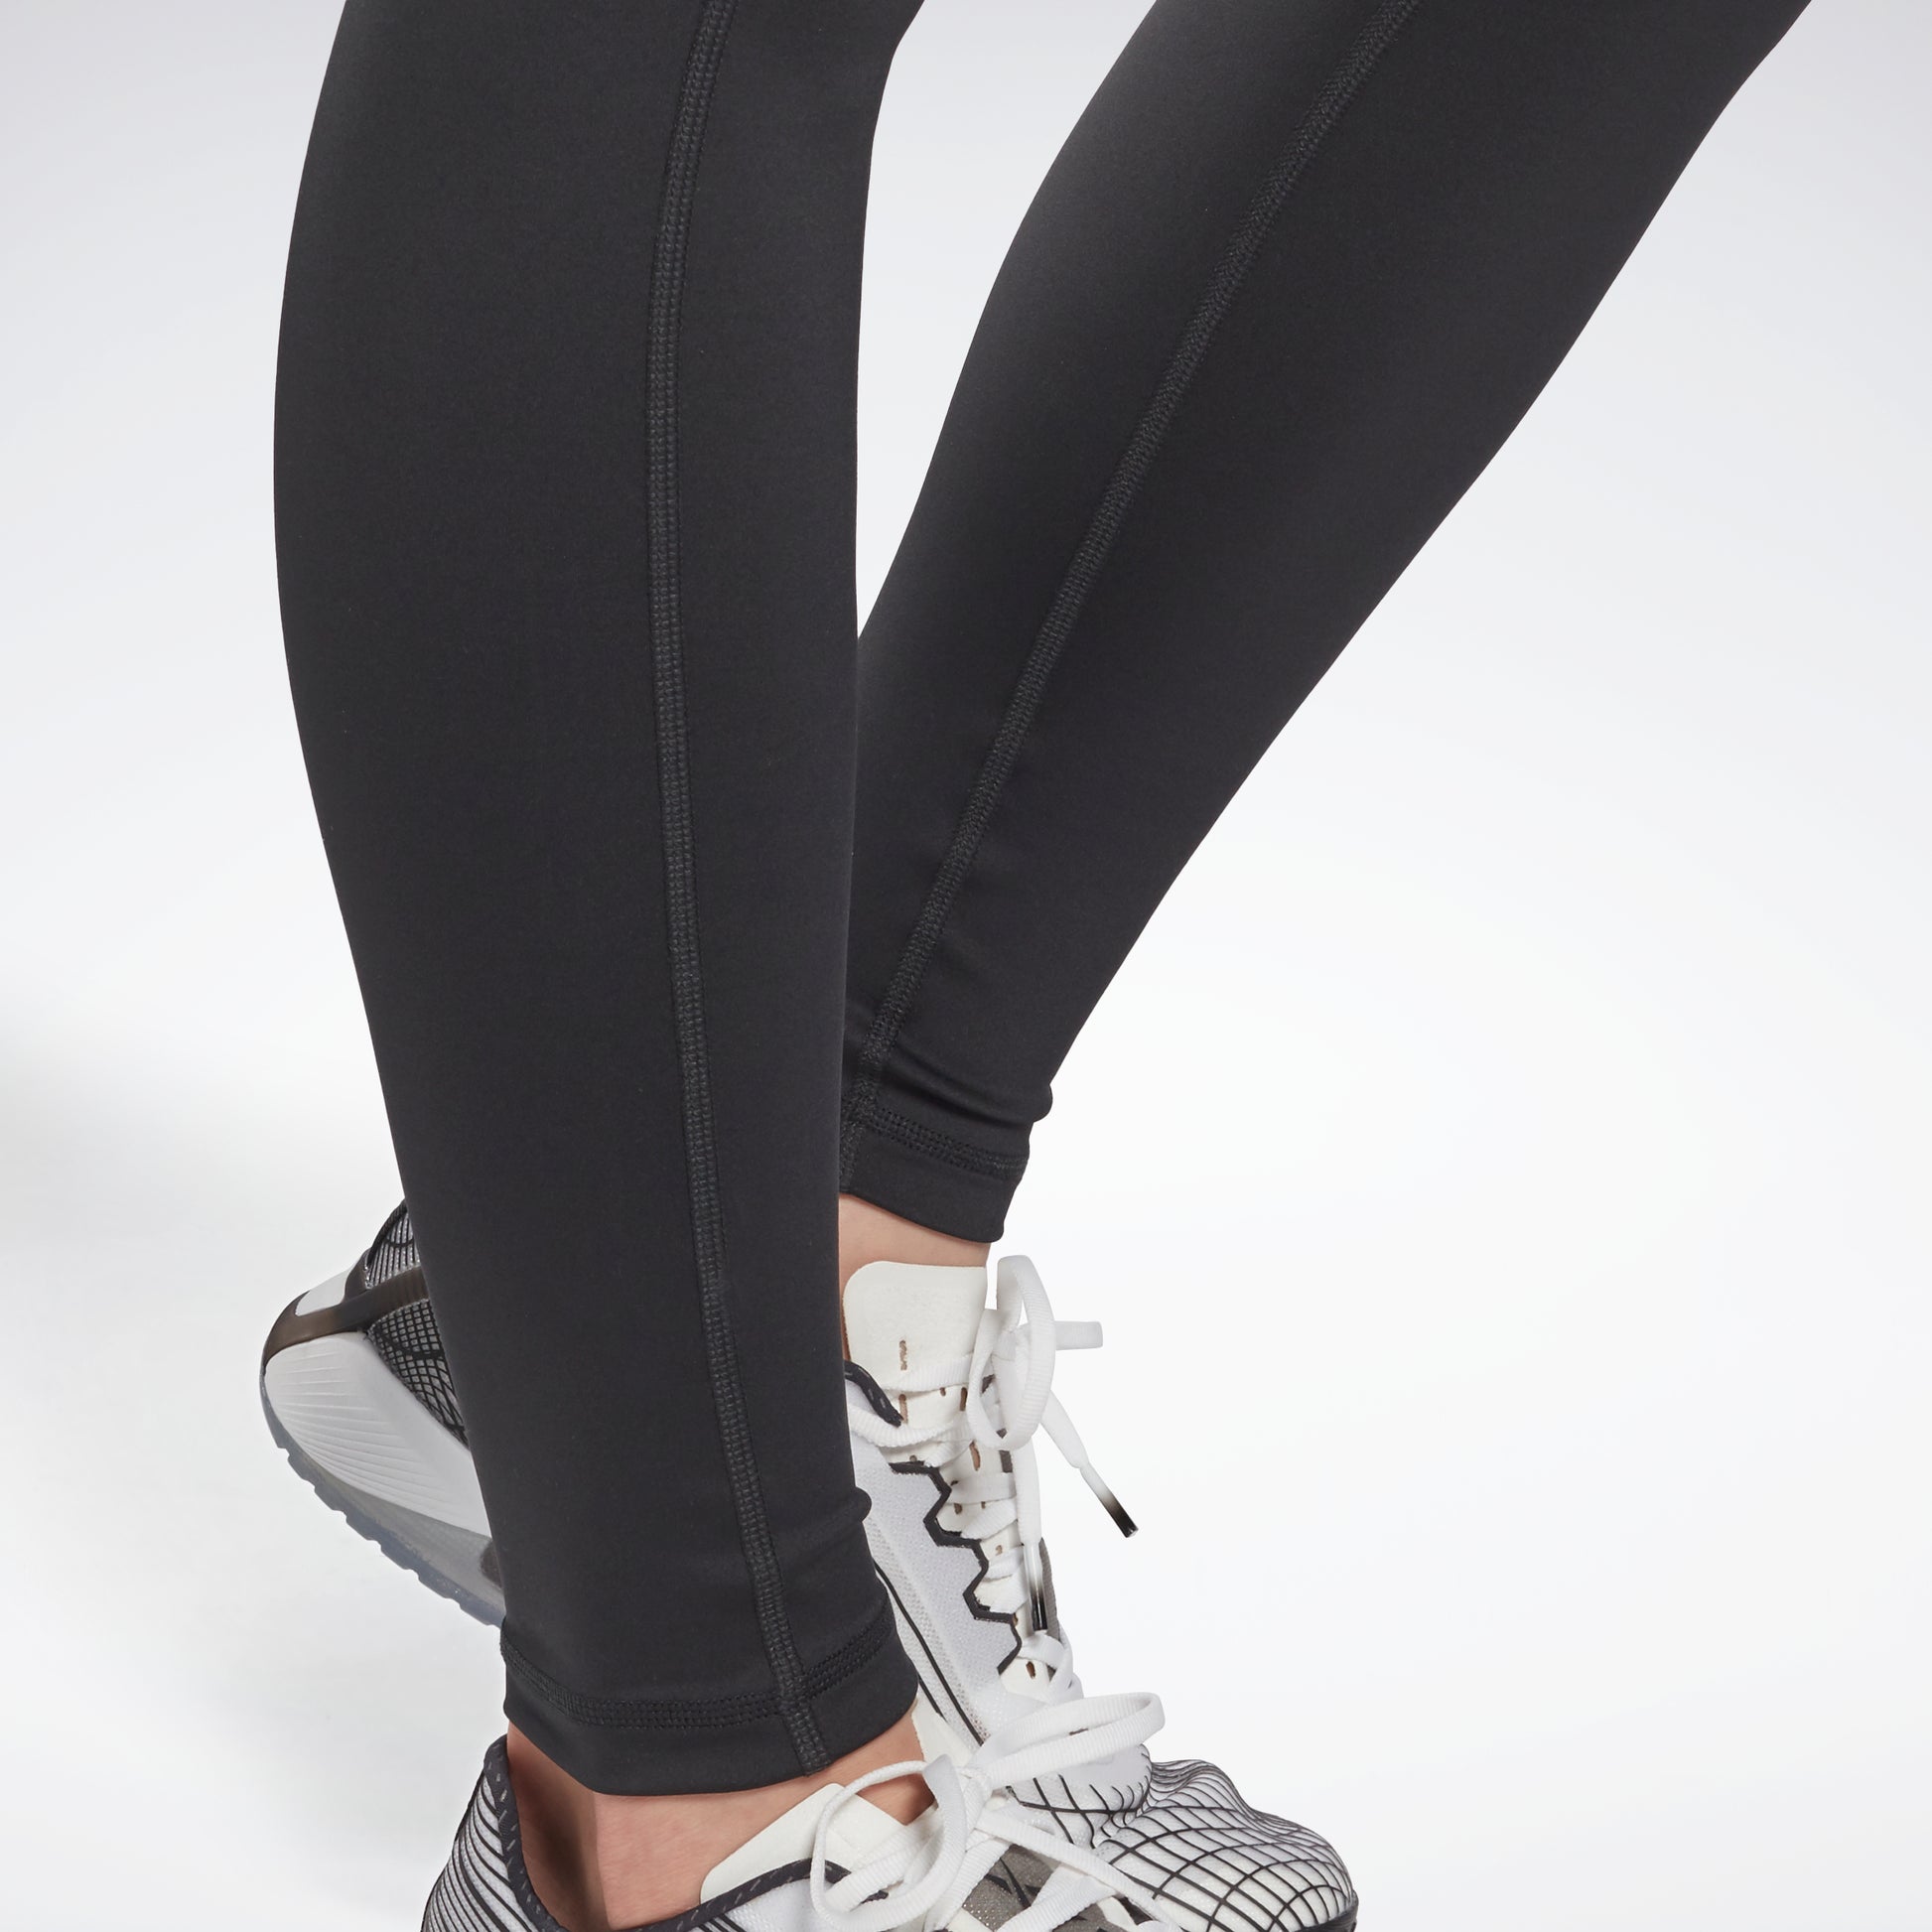 adidas Women's Mesh 3-Stripe High-Waist Leggings - Macy's